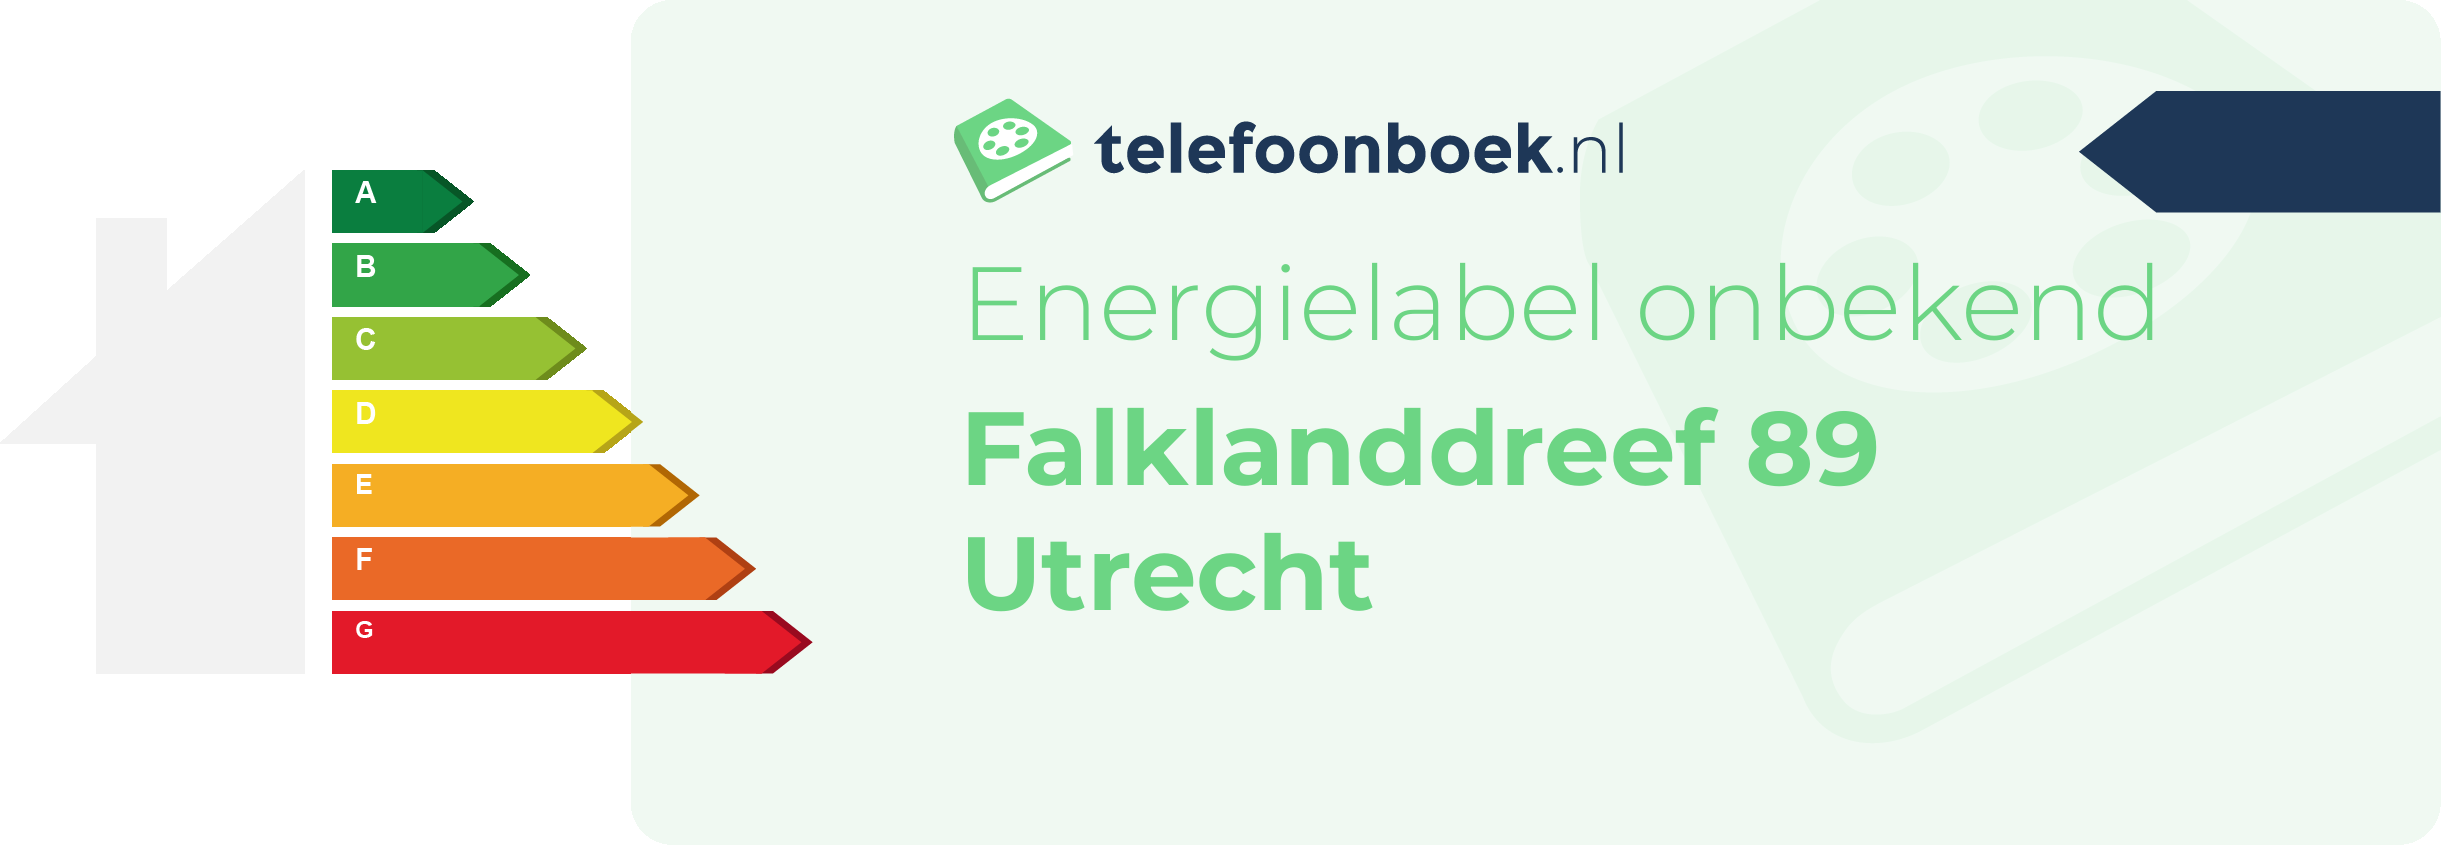 Energielabel Falklanddreef 89 Utrecht